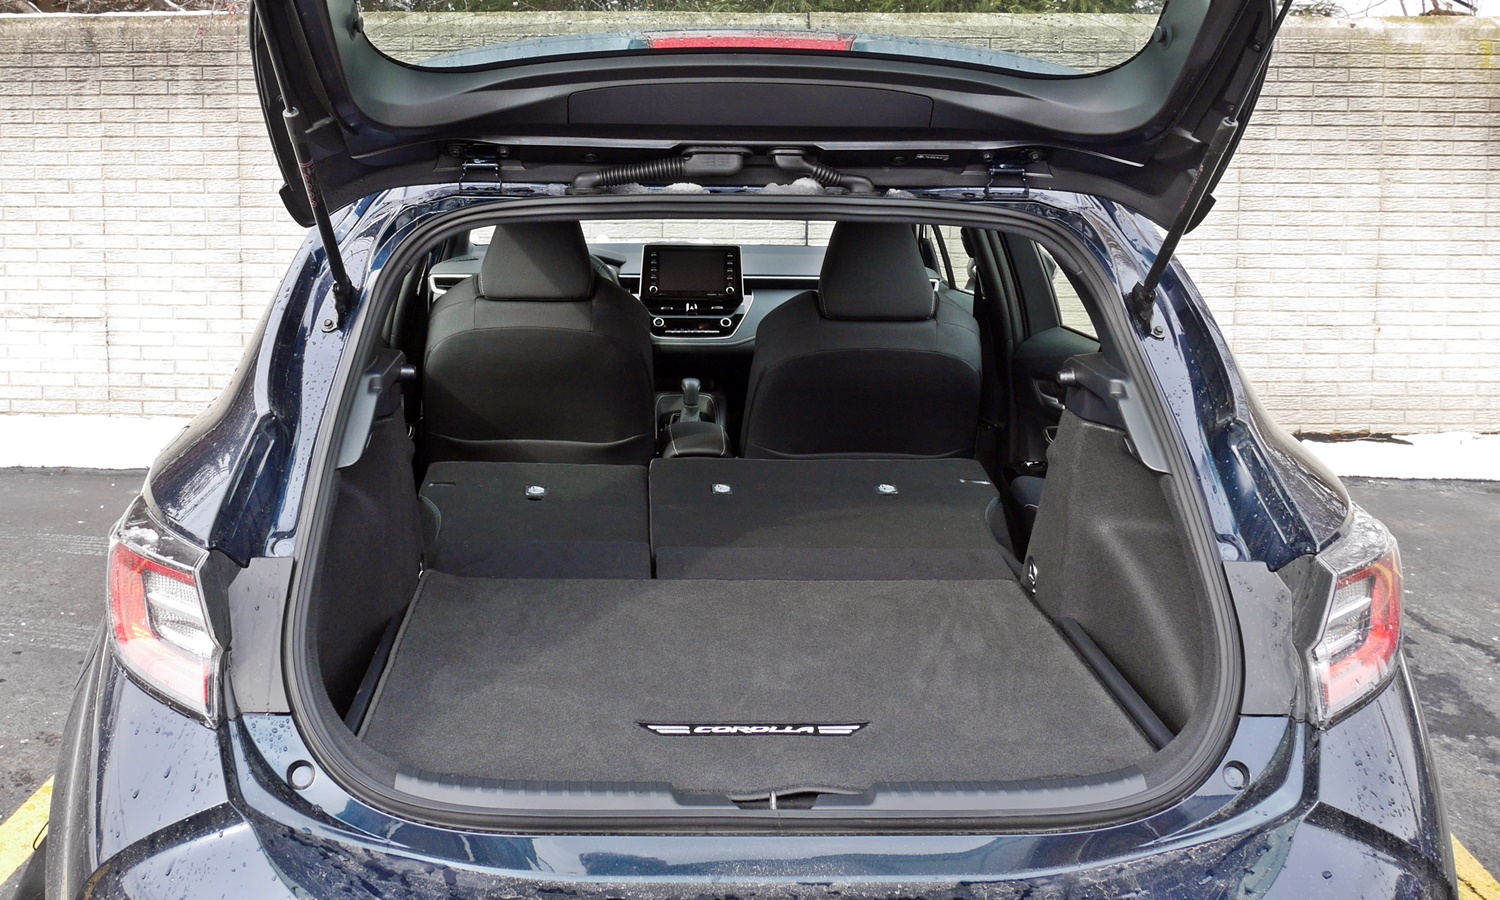 Toyota Corolla Hatchback Photos: Corolla Hatchback cargo area seats folded